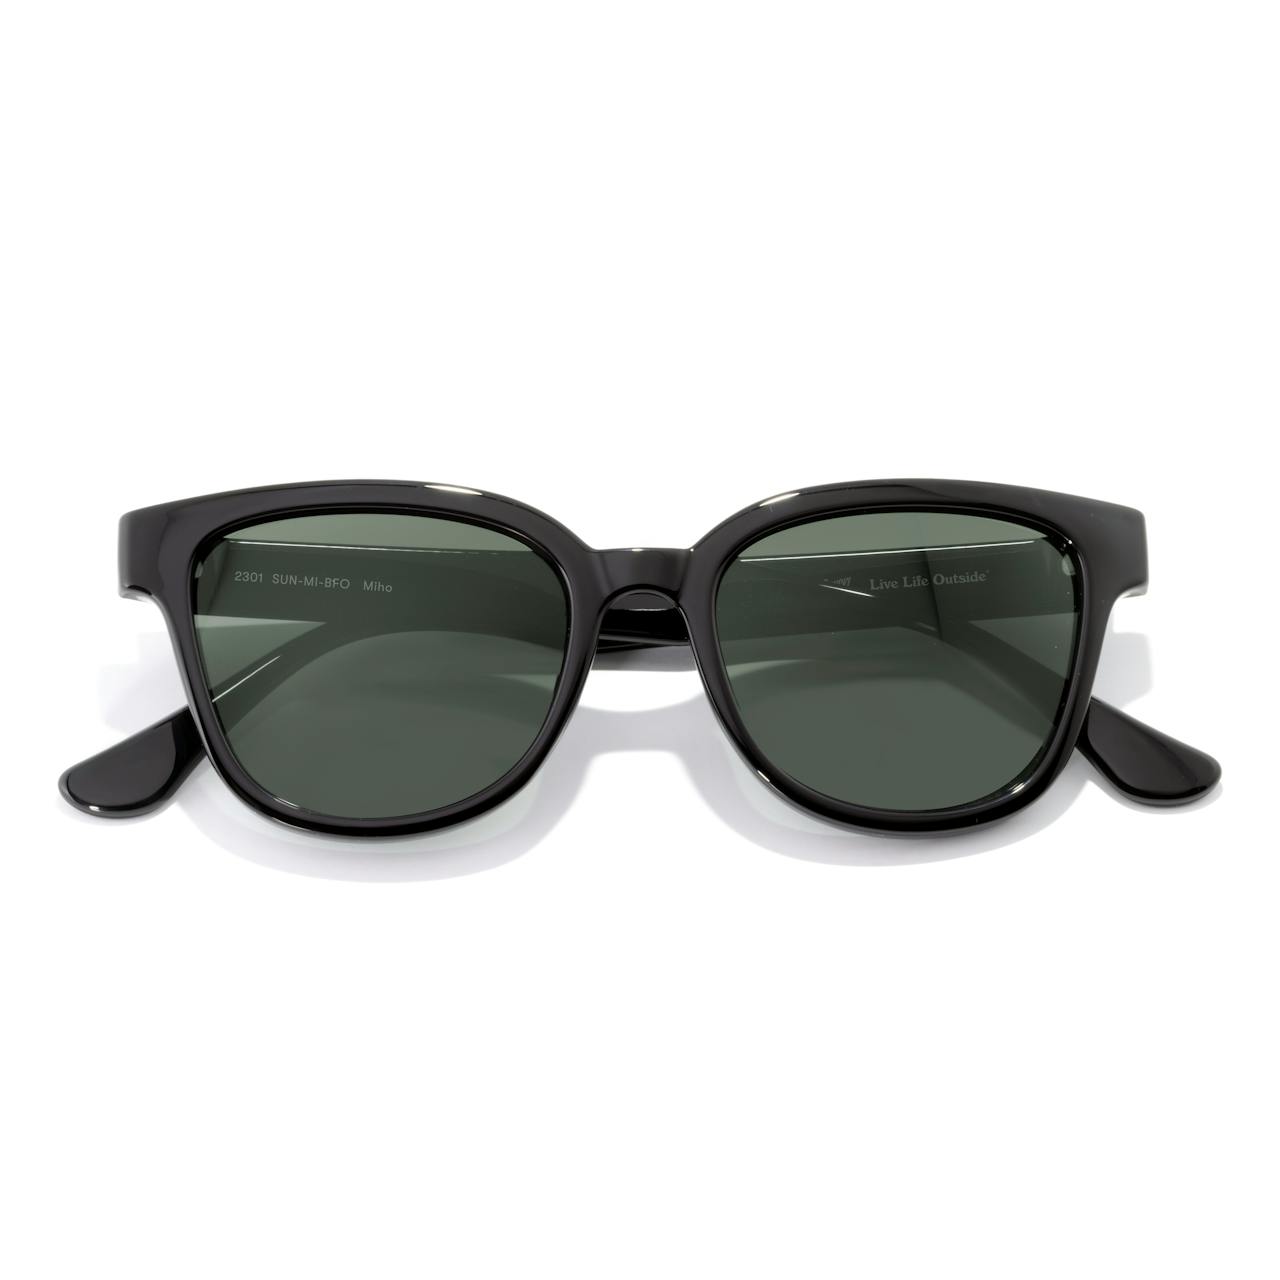 Black | Huckberry Miho | Sunglasses - Sunski Forest Sunglasses